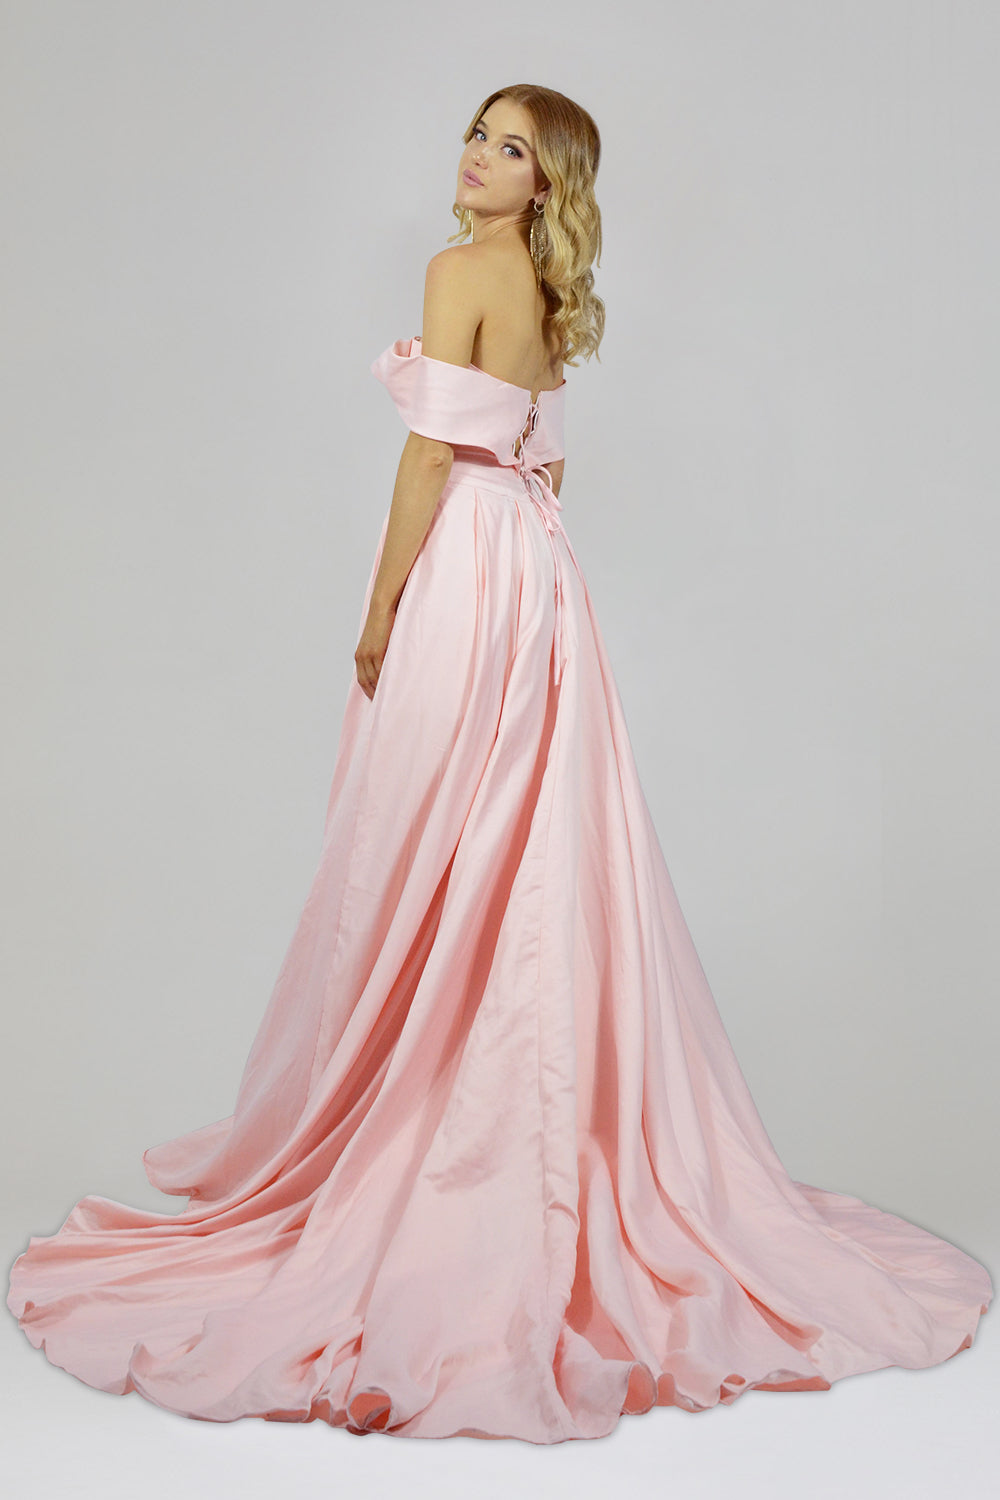 custom pink ball gown wedding dress perth australia online envious bridal formal